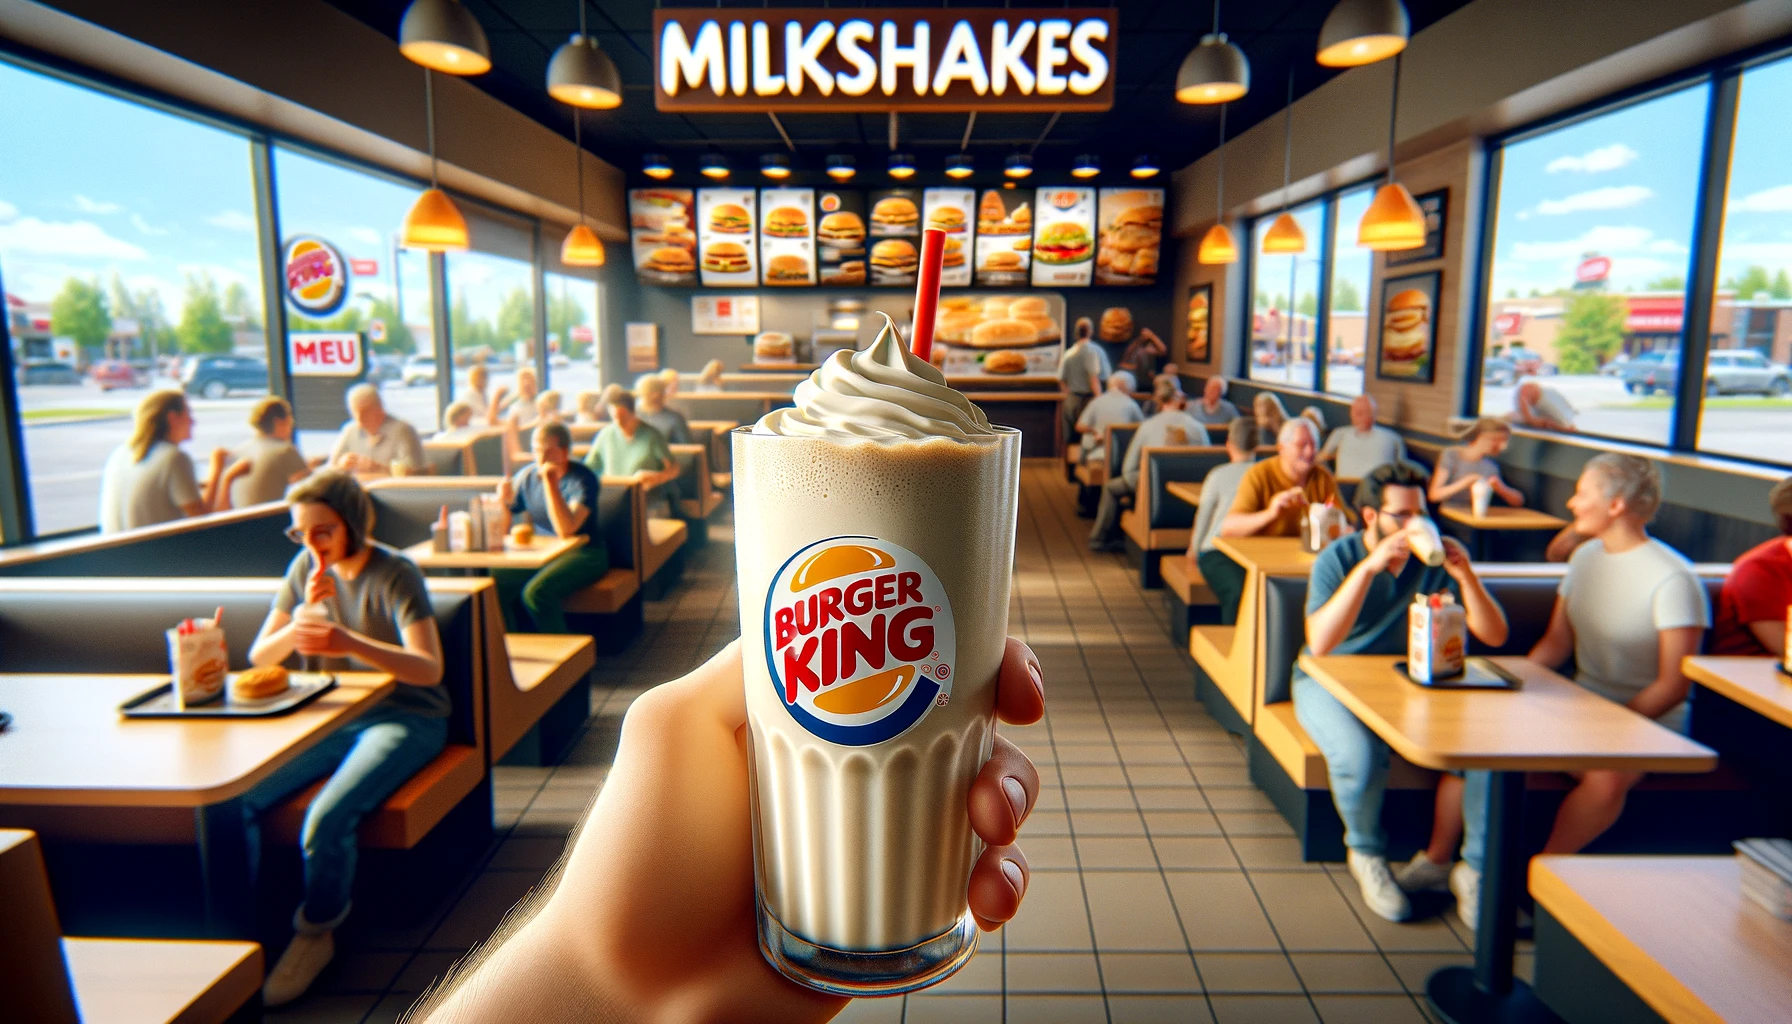 Burger King Milkshakes Menu